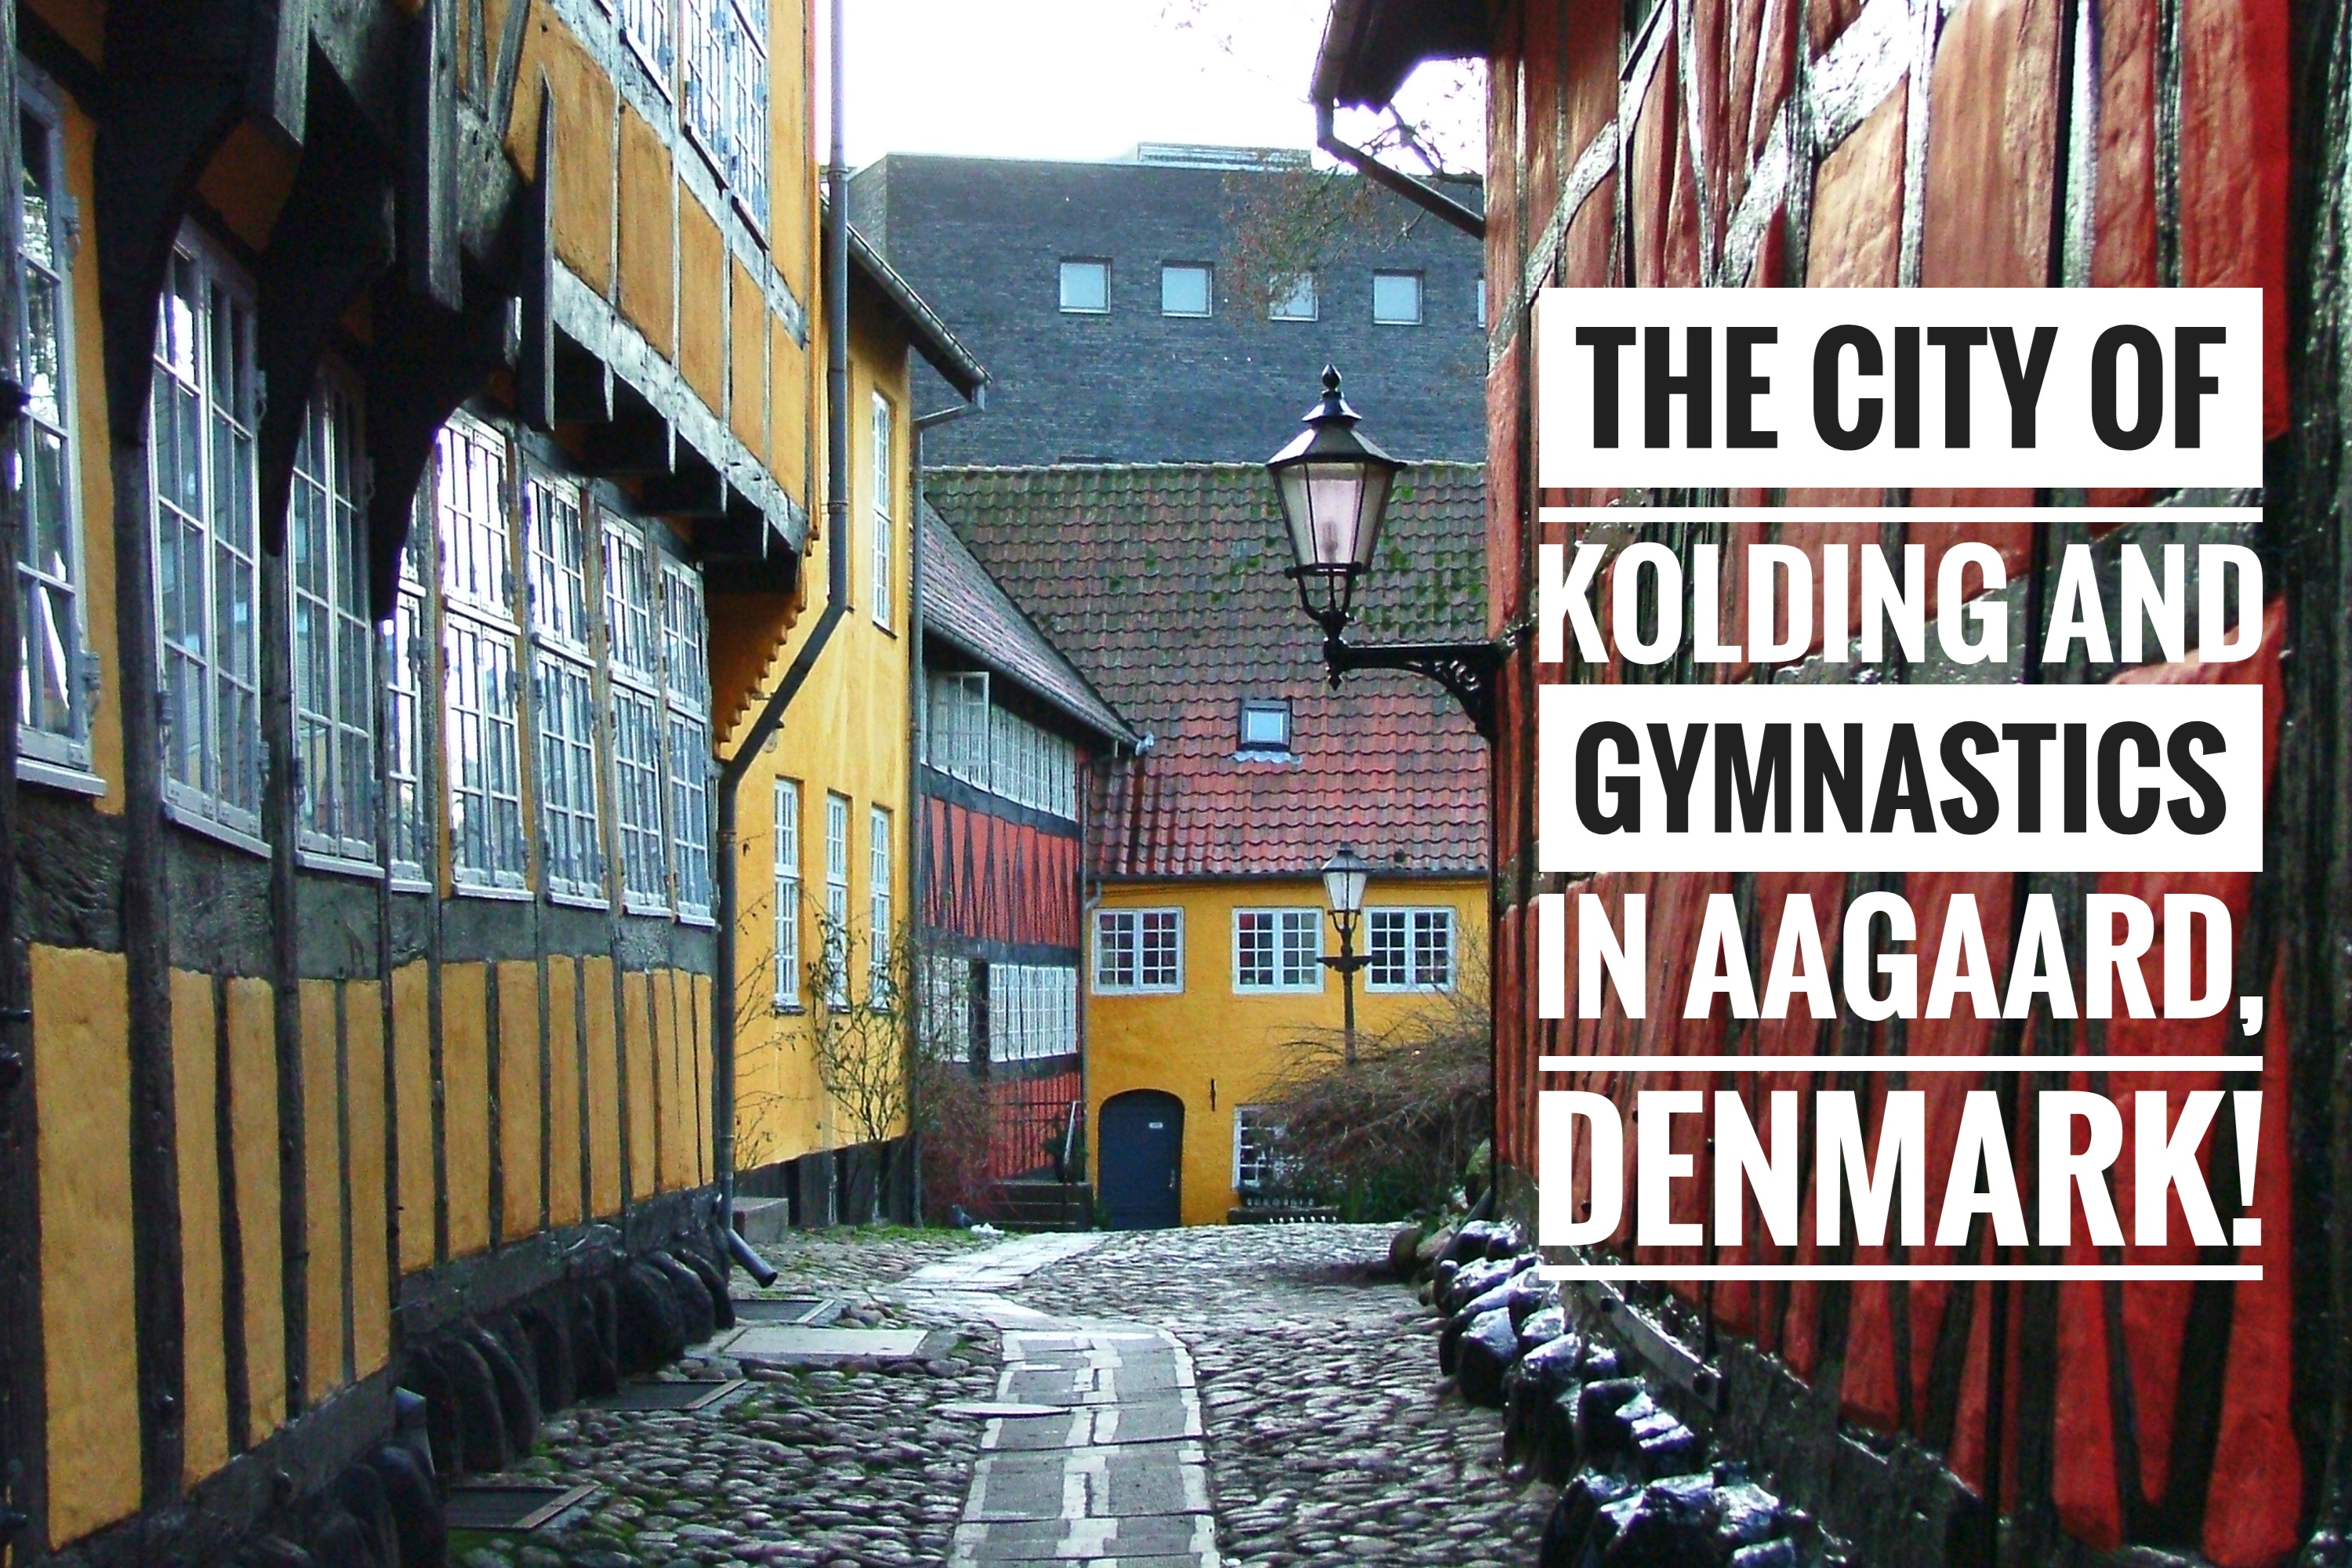 The City of Kolding and Gymnastics in Aagaard, Denmark!